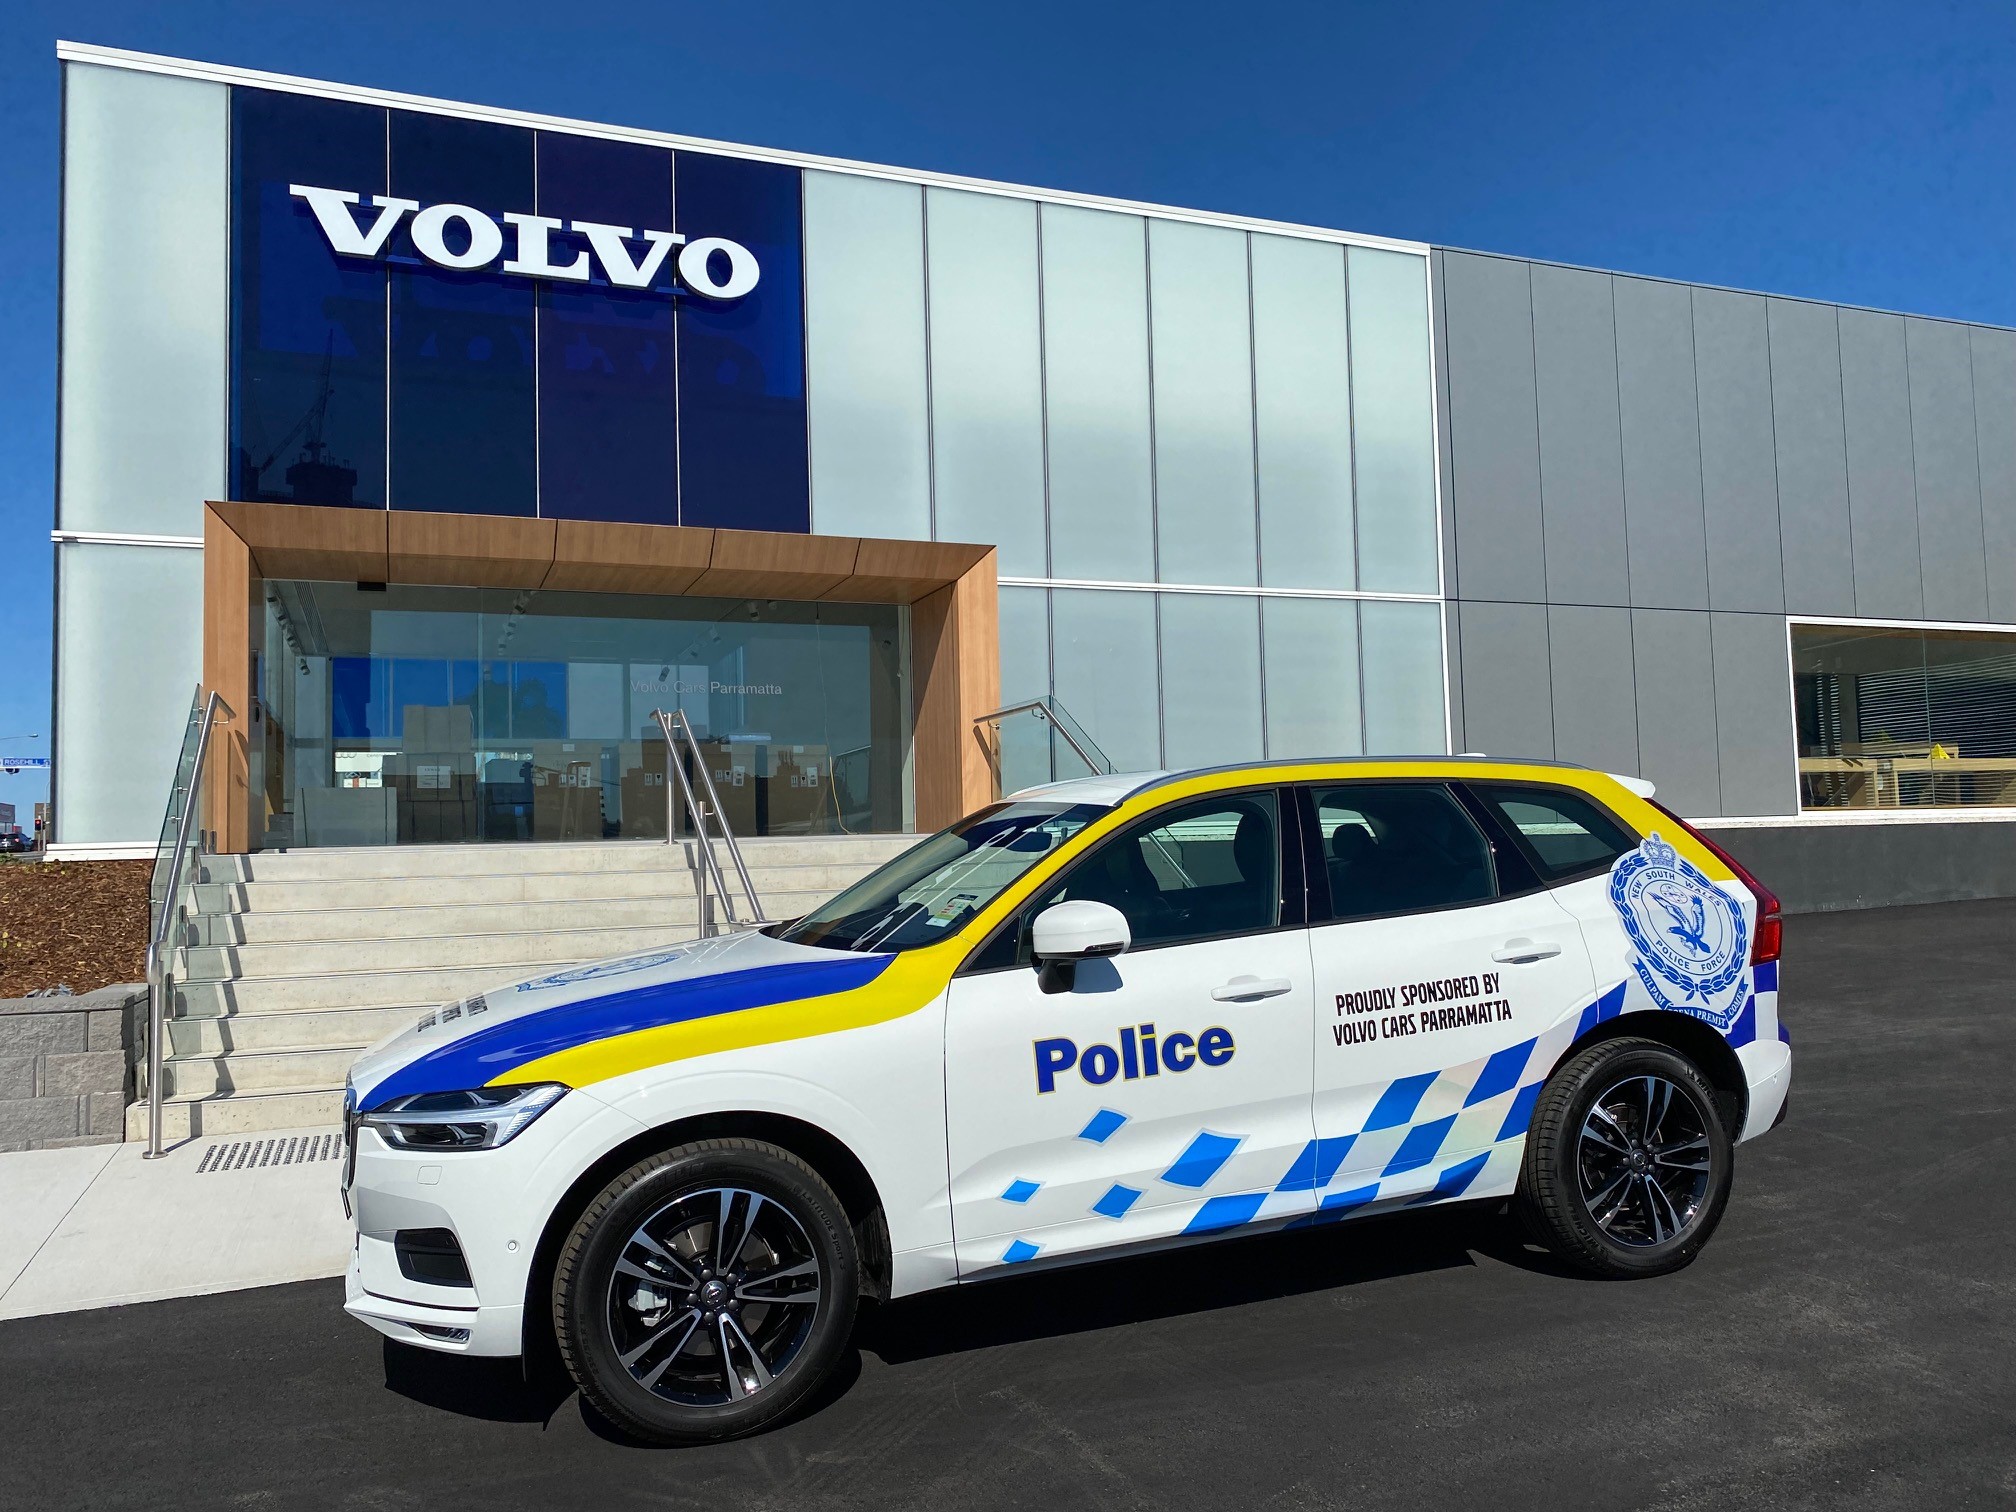 Volvo Cars Rushcutters Bay & Parramatta in the community